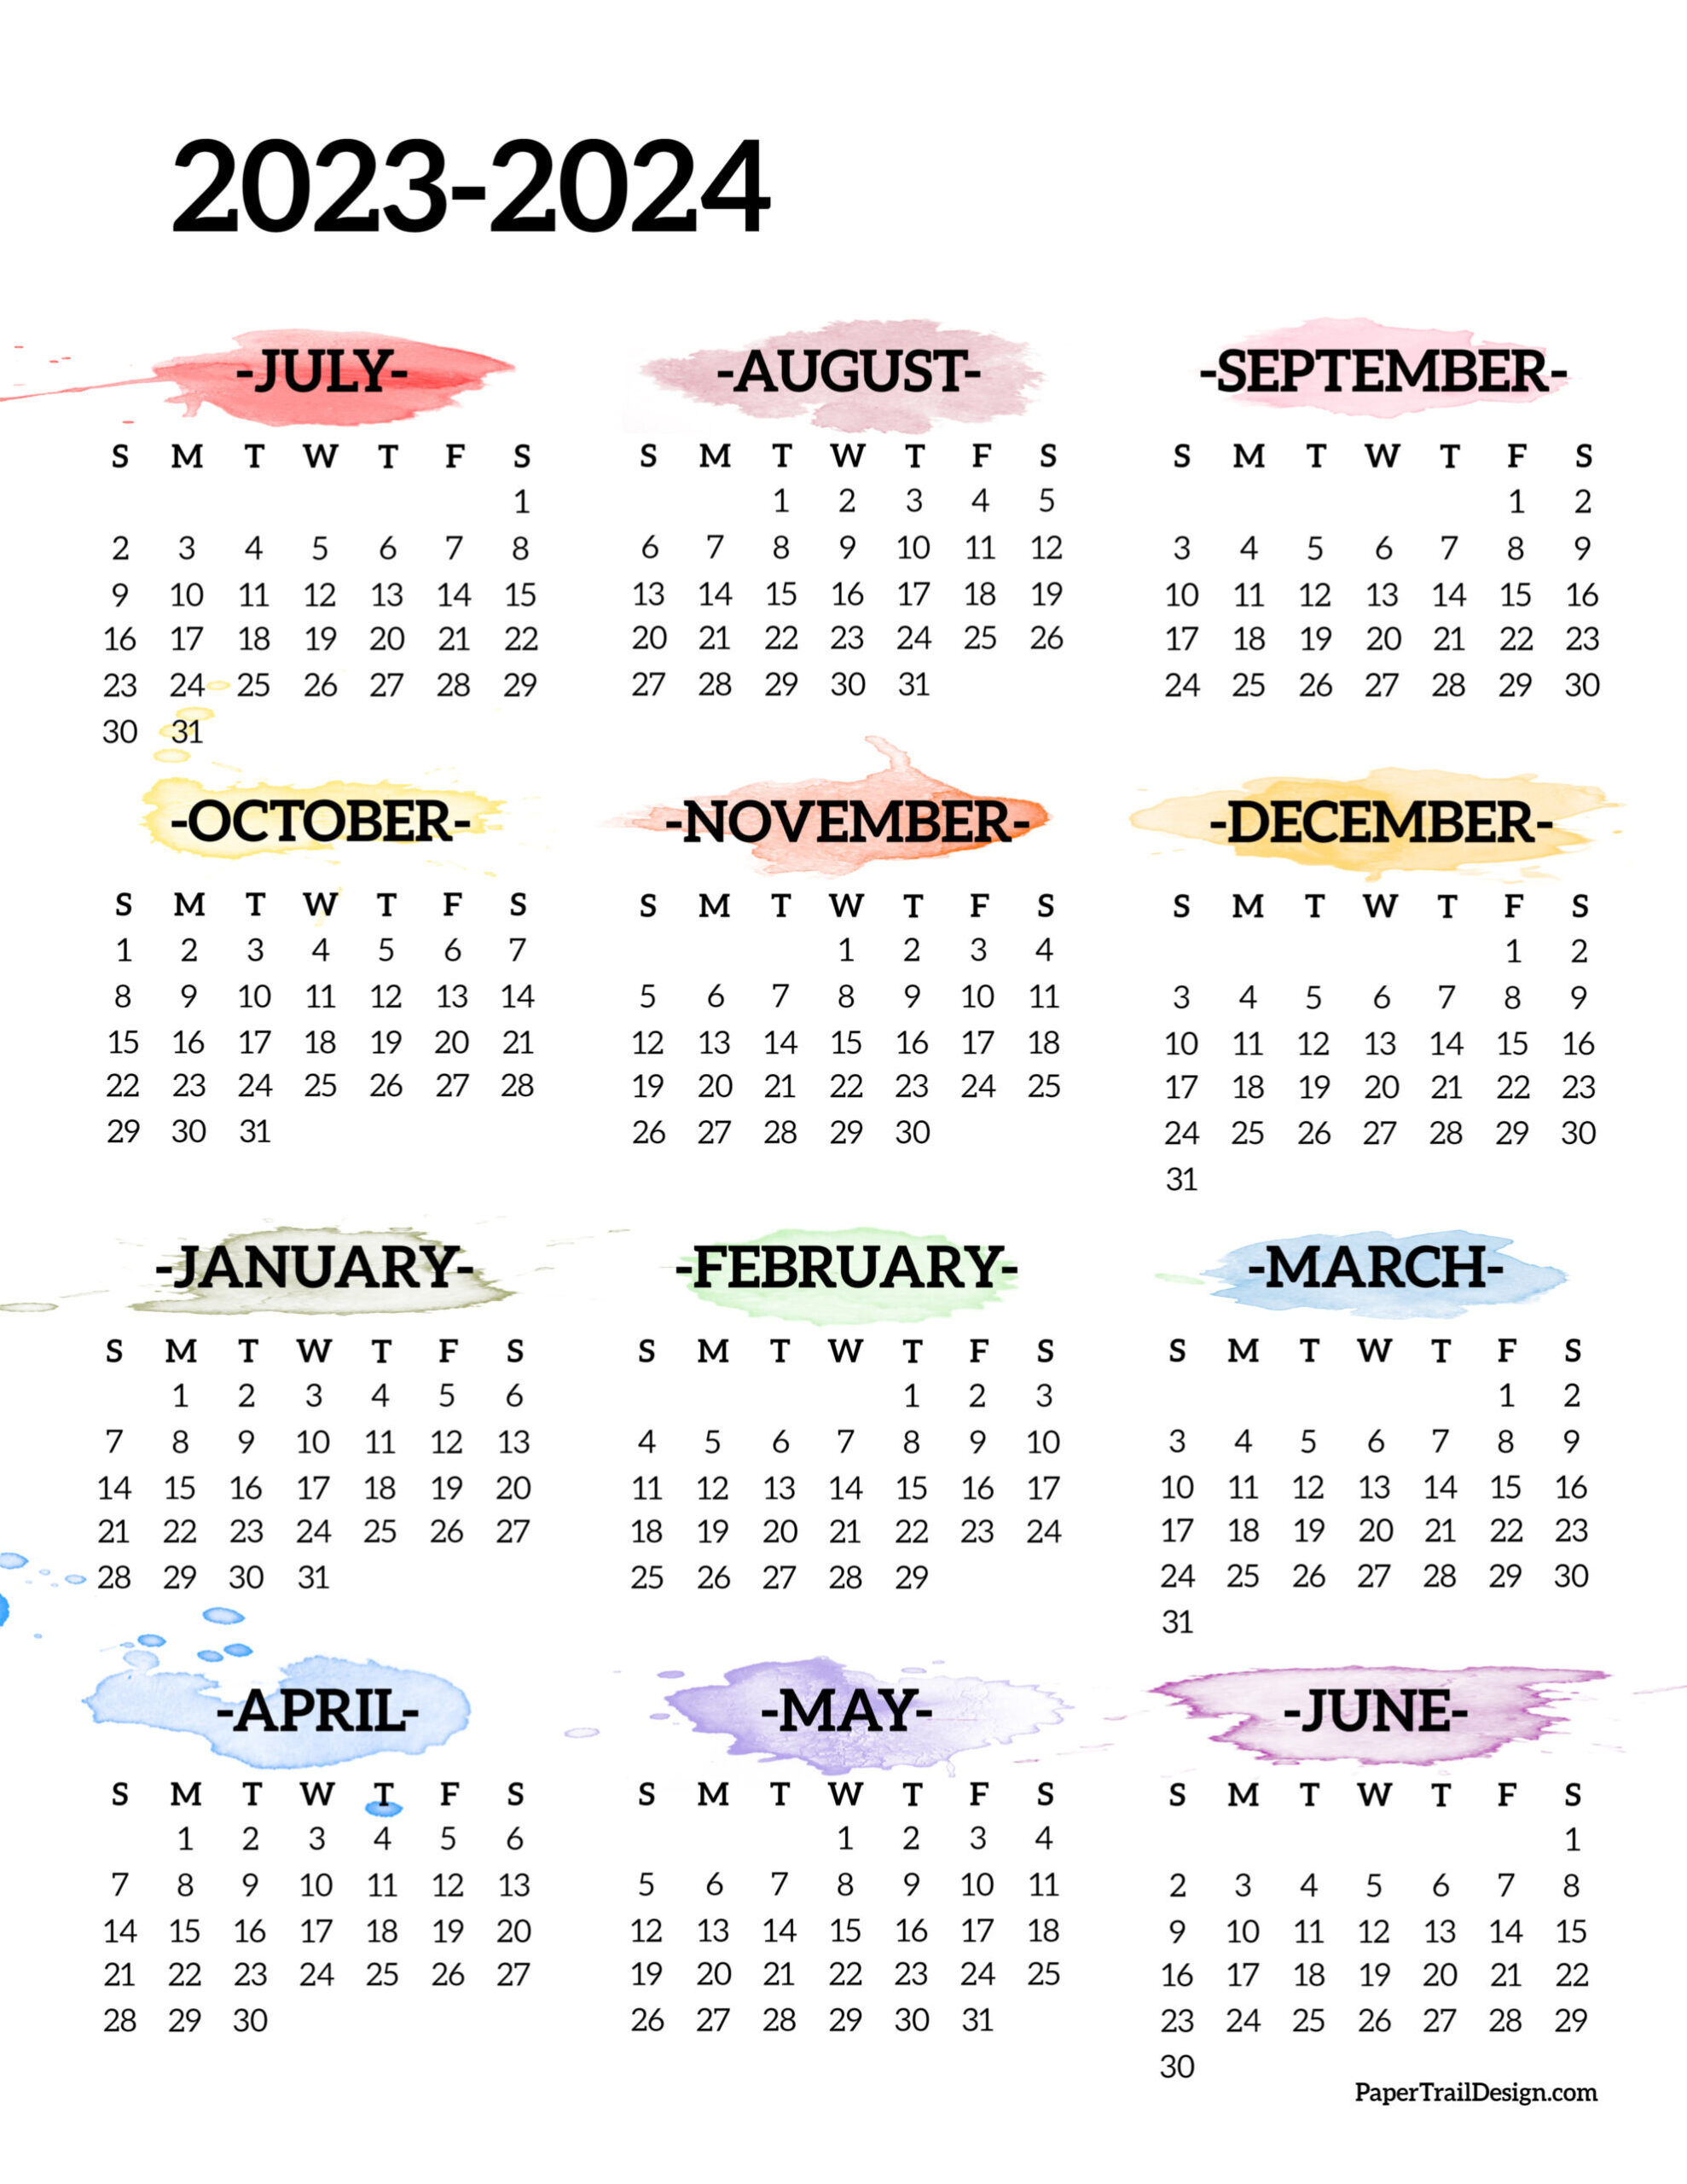 2023-2024 School Year Calendar Free Printable - Paper Trail Design throughout Calendar December 2023 To June 2024